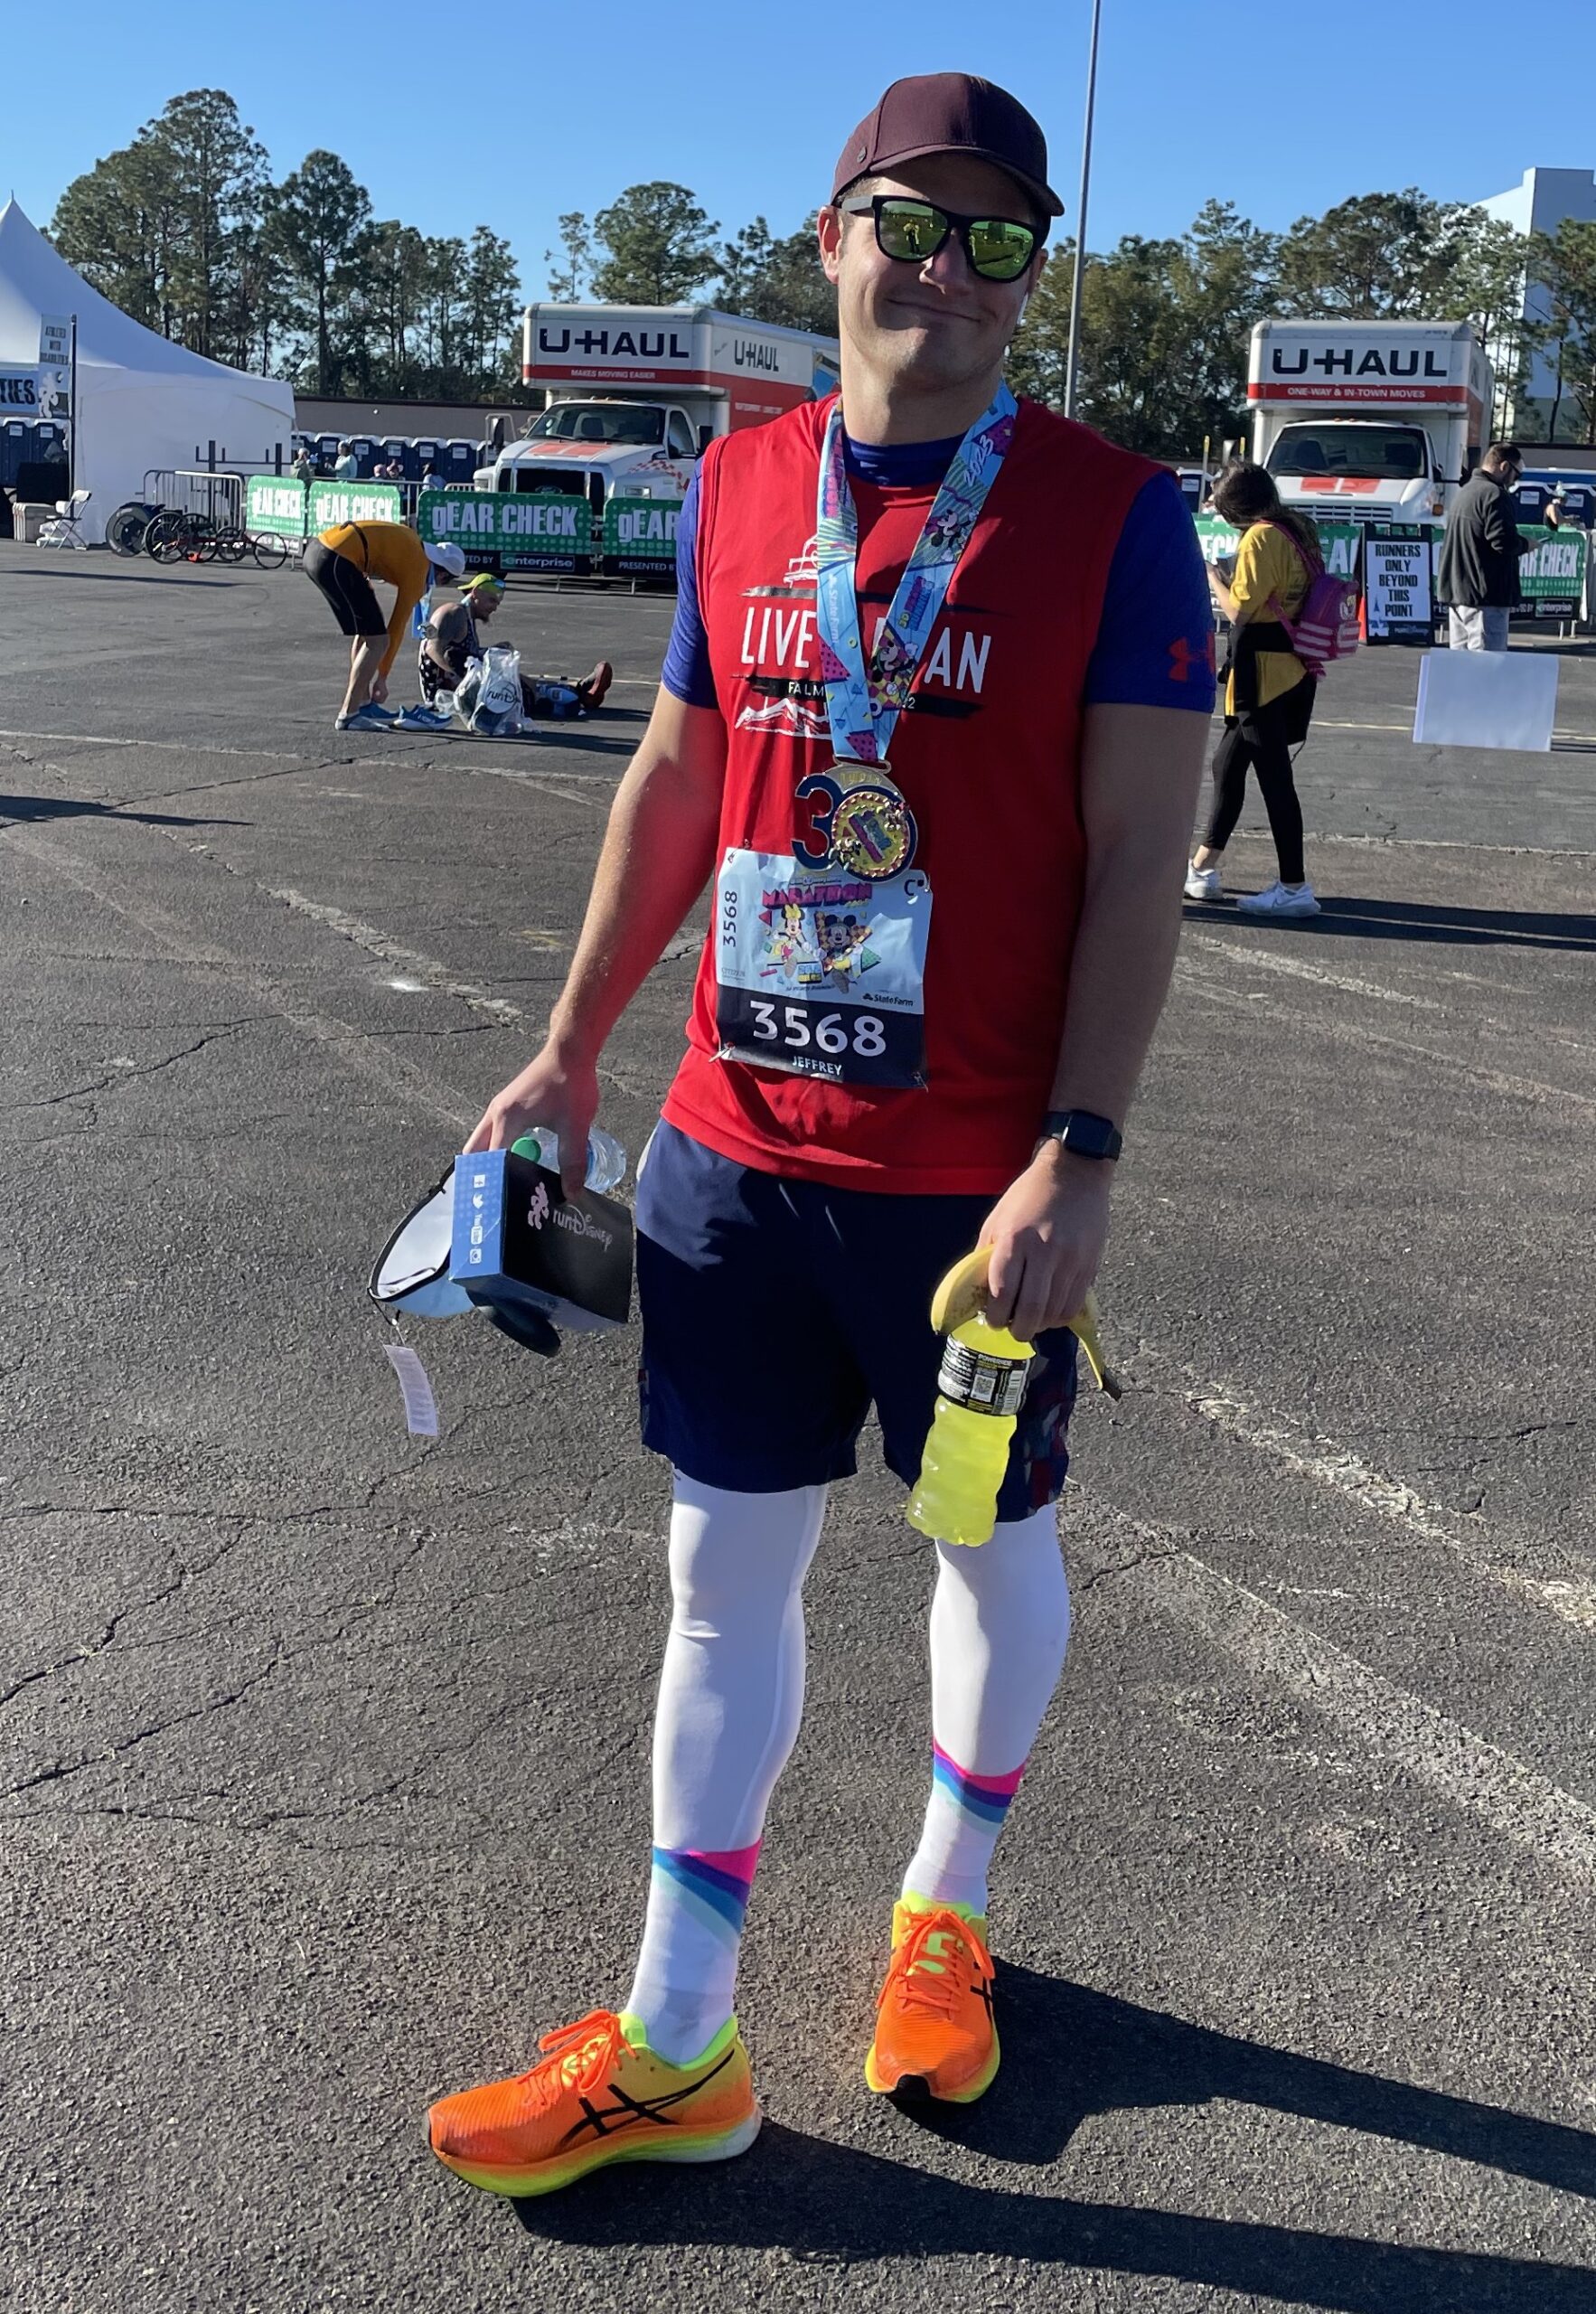 Doyle takes on Boston Marathon in memory of childhood friend